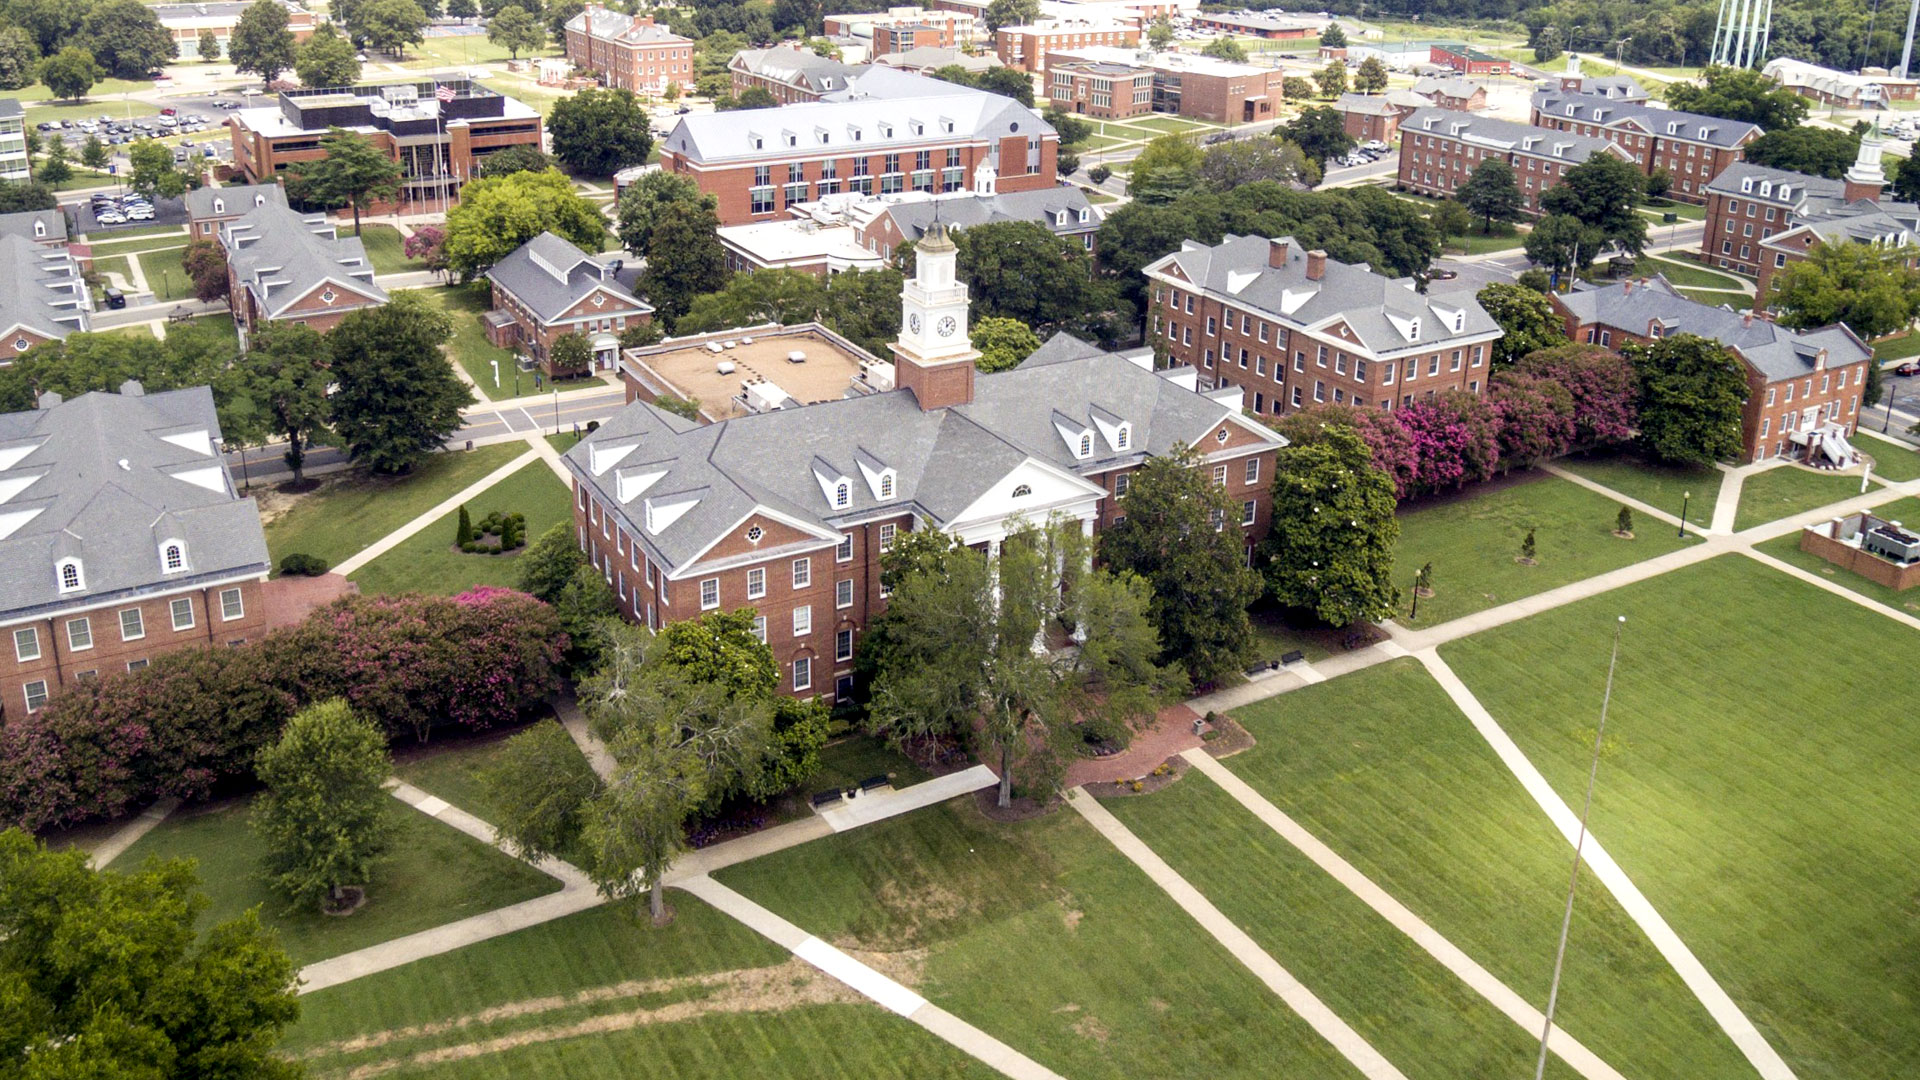 VSU Online  Virginia State University